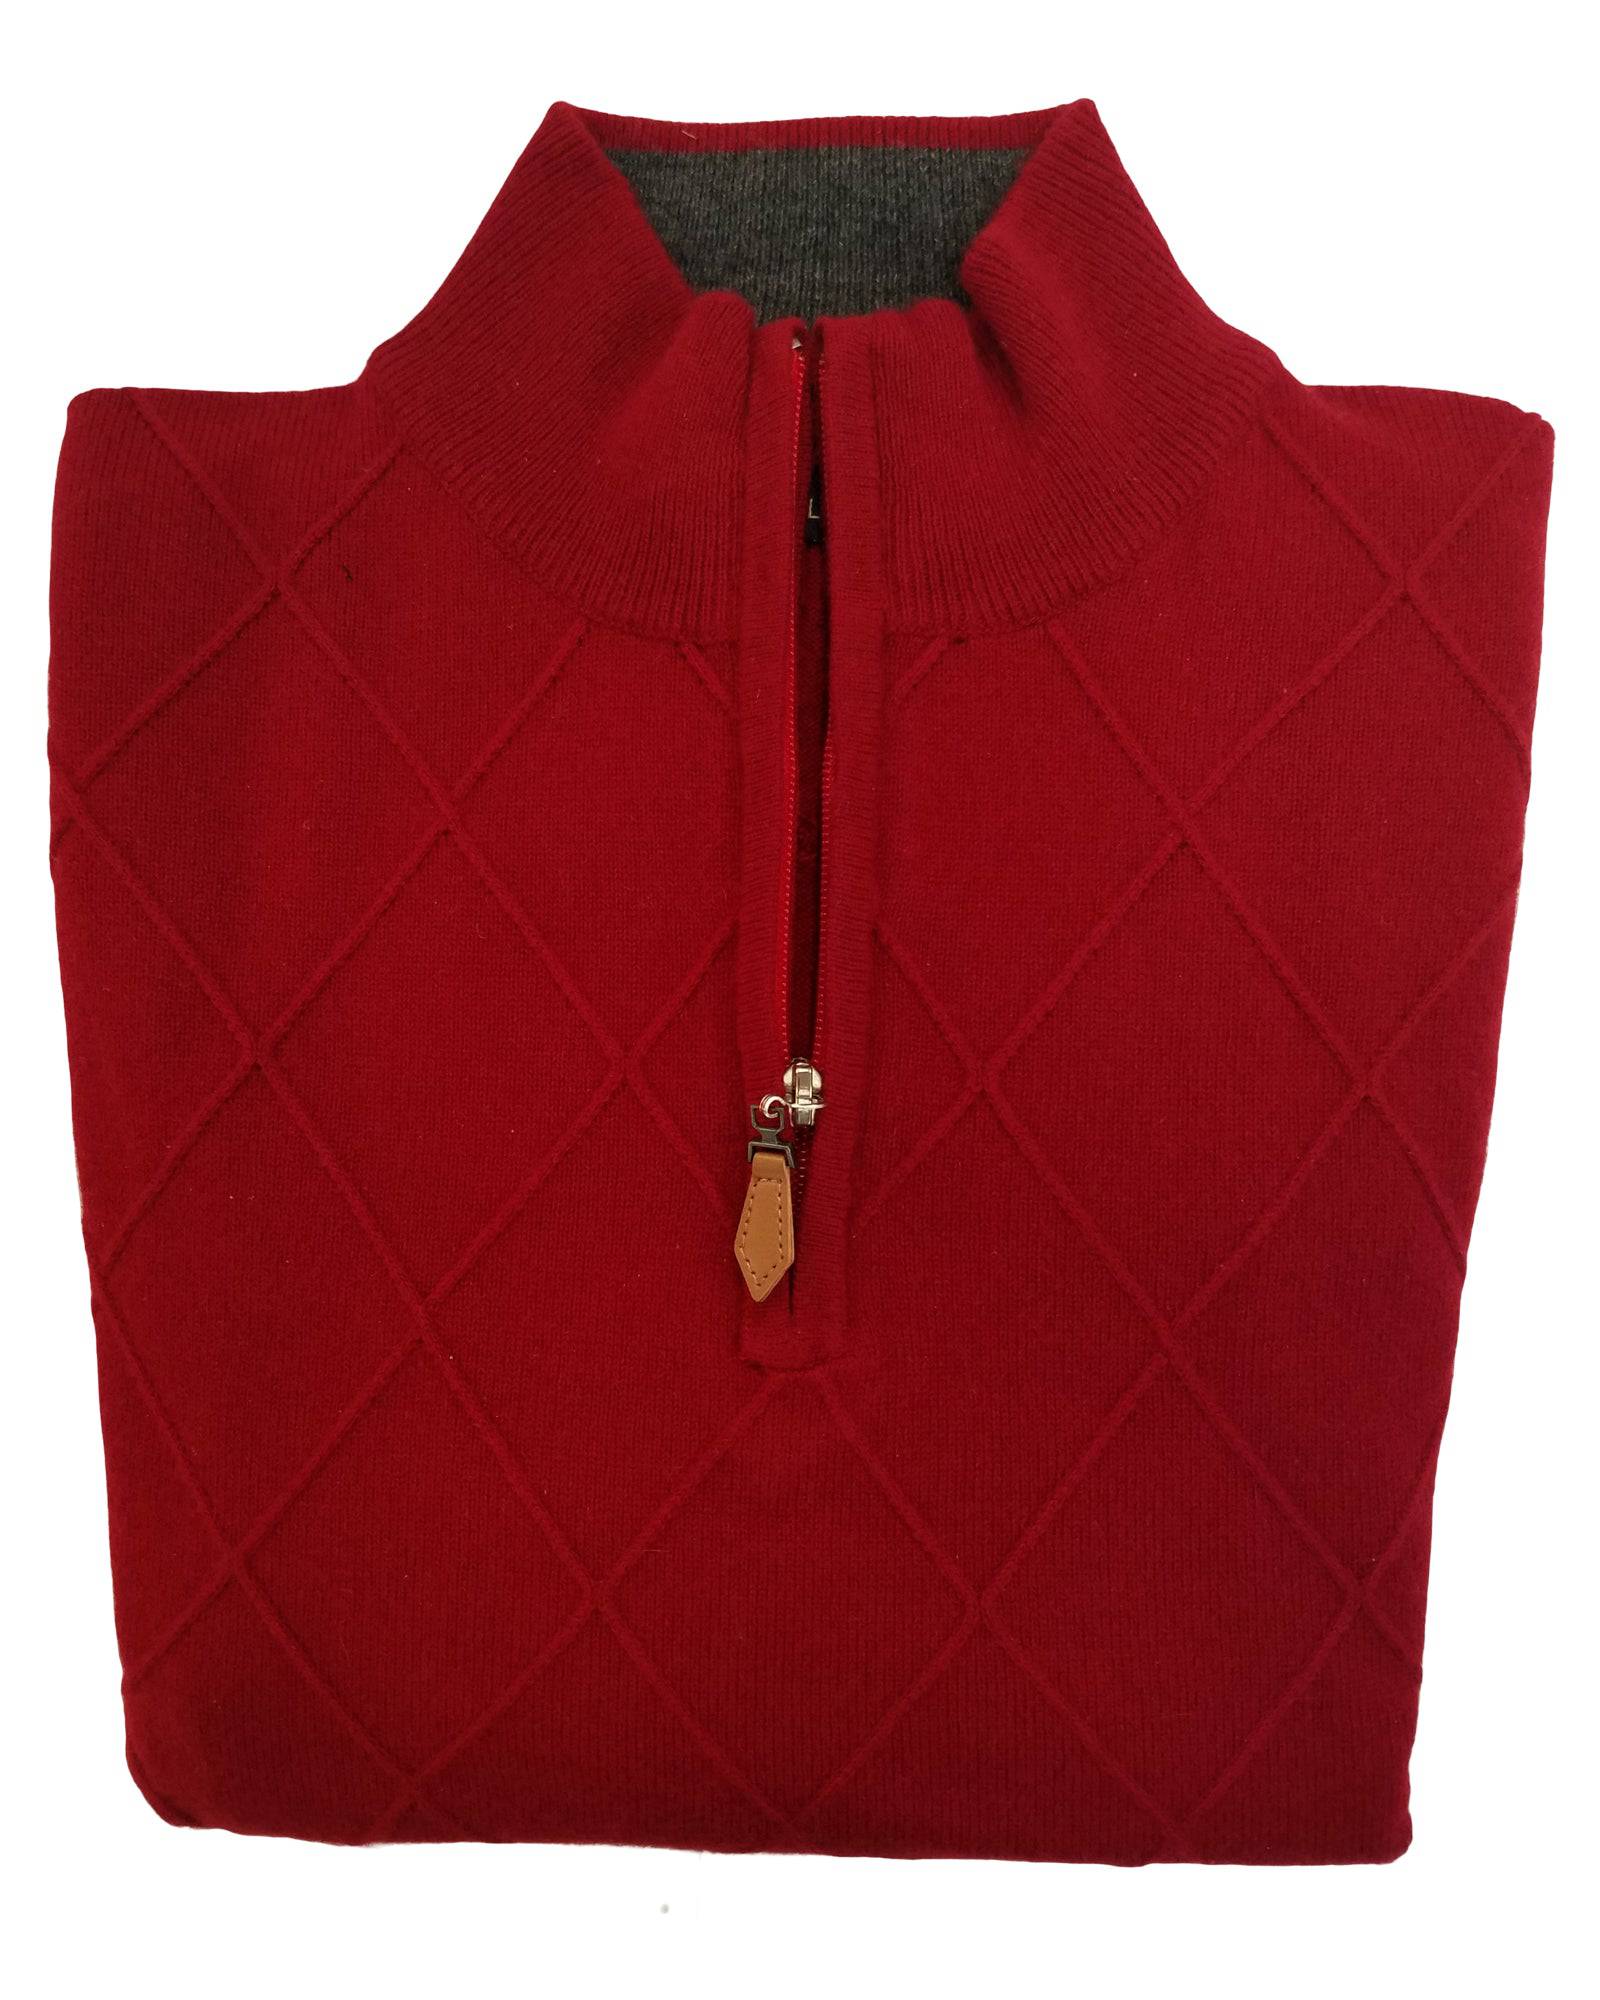 Zip Mock Sweater in Red Cashmere & Wool Diamond Weave - Rainwater's Men's Clothing and Tuxedo Rental